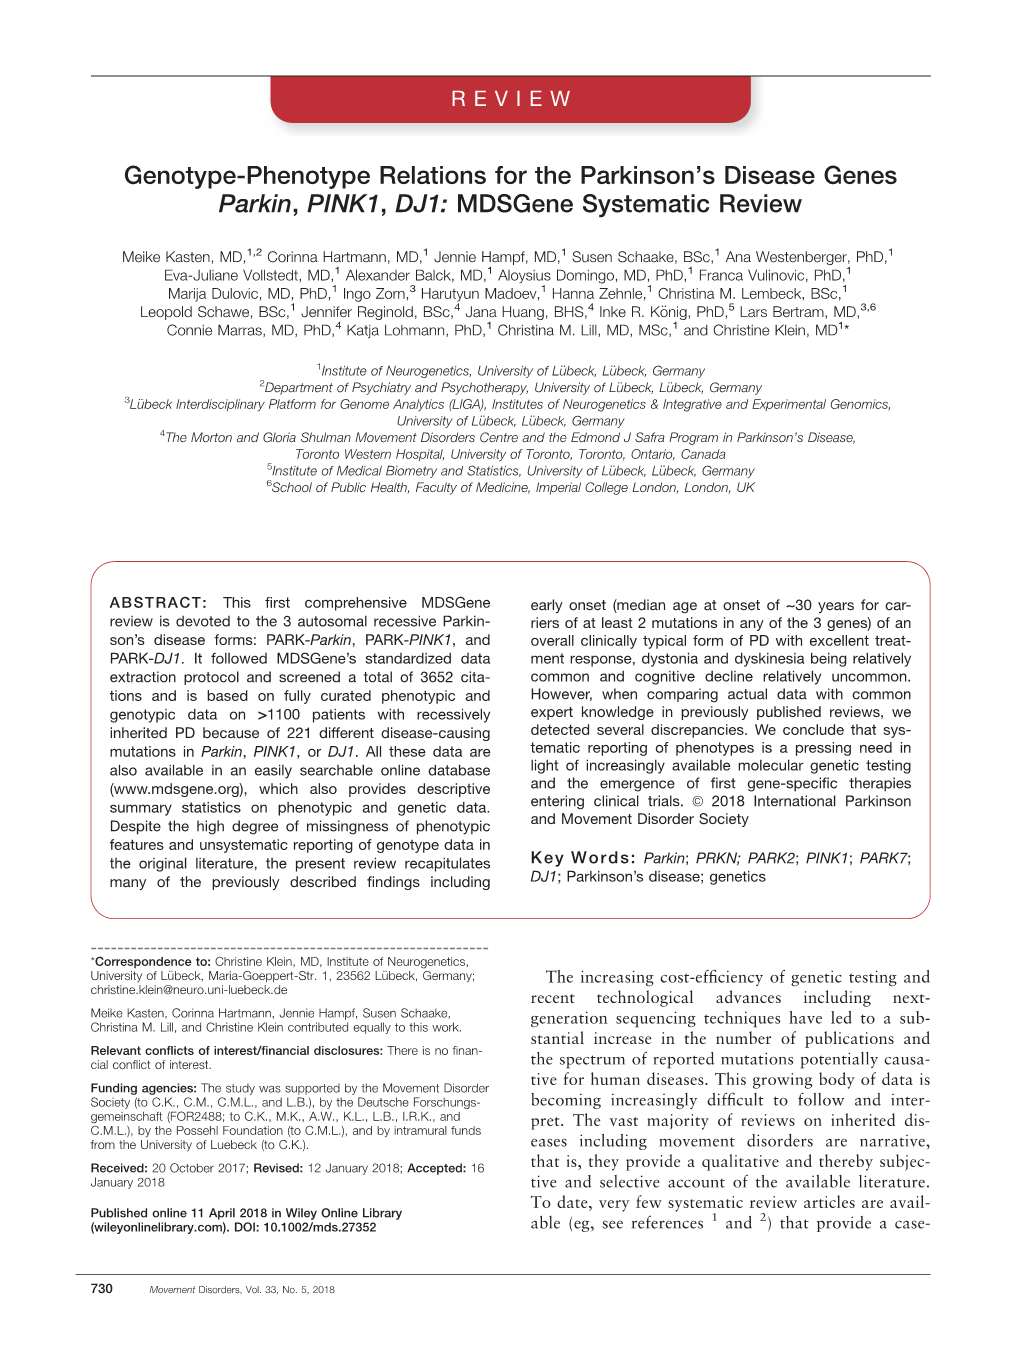 S Disease Genes Parkin, PINK1, DJ1: Mdsgene Systematic Review